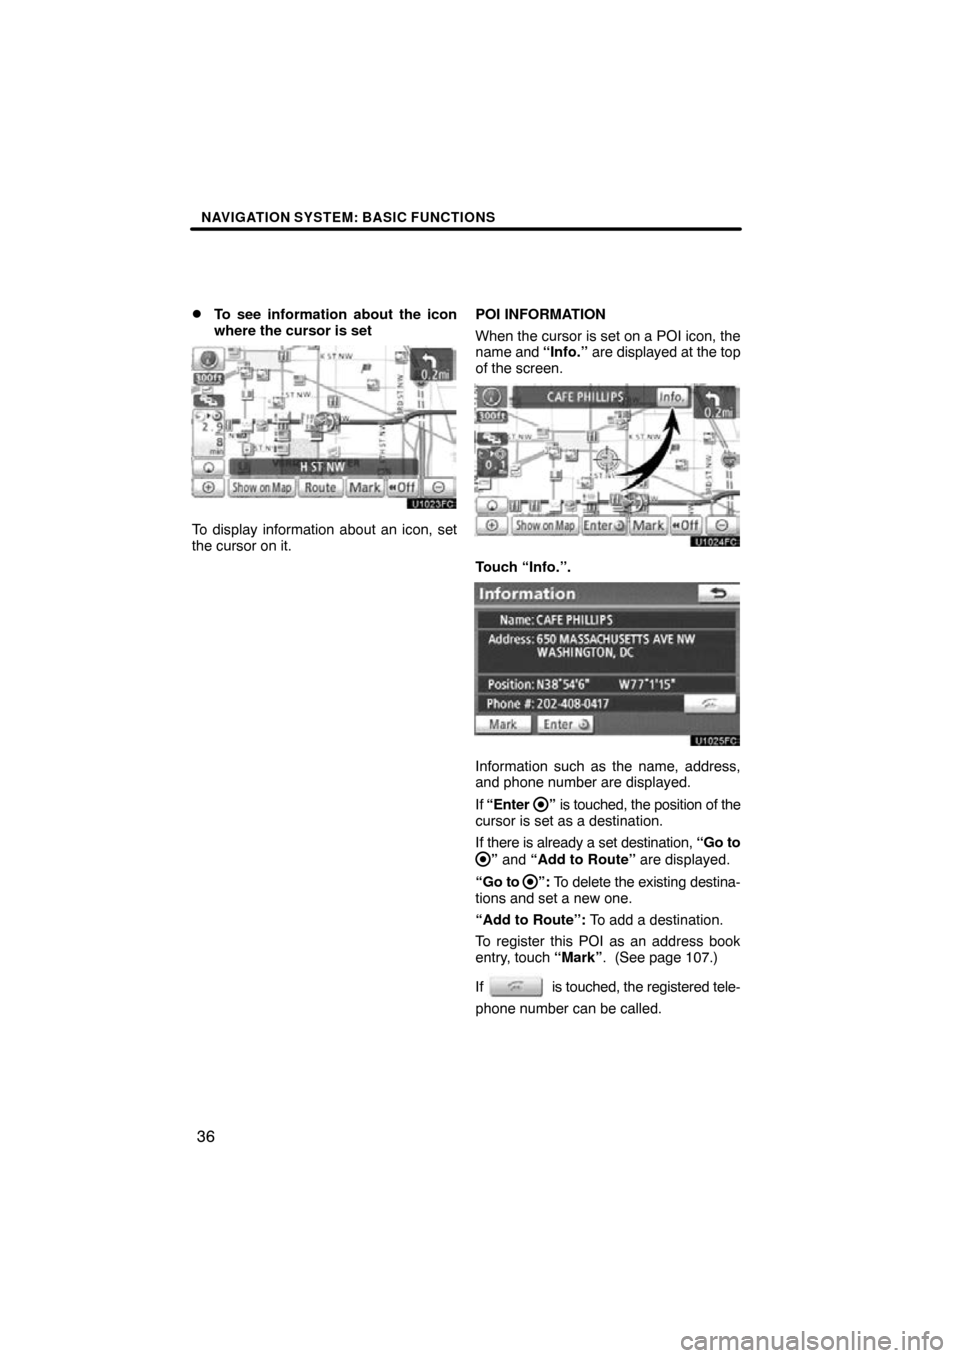 TOYOTA LAND CRUISER 2010 J200 Navigation Manual NAVIGATION SYSTEM: BASIC FUNCTIONS
36

To see information about the icon
where the cursor is set
To display information about an icon, set
the cursor on it.
POI INFORMATION
When the cursor is set on 